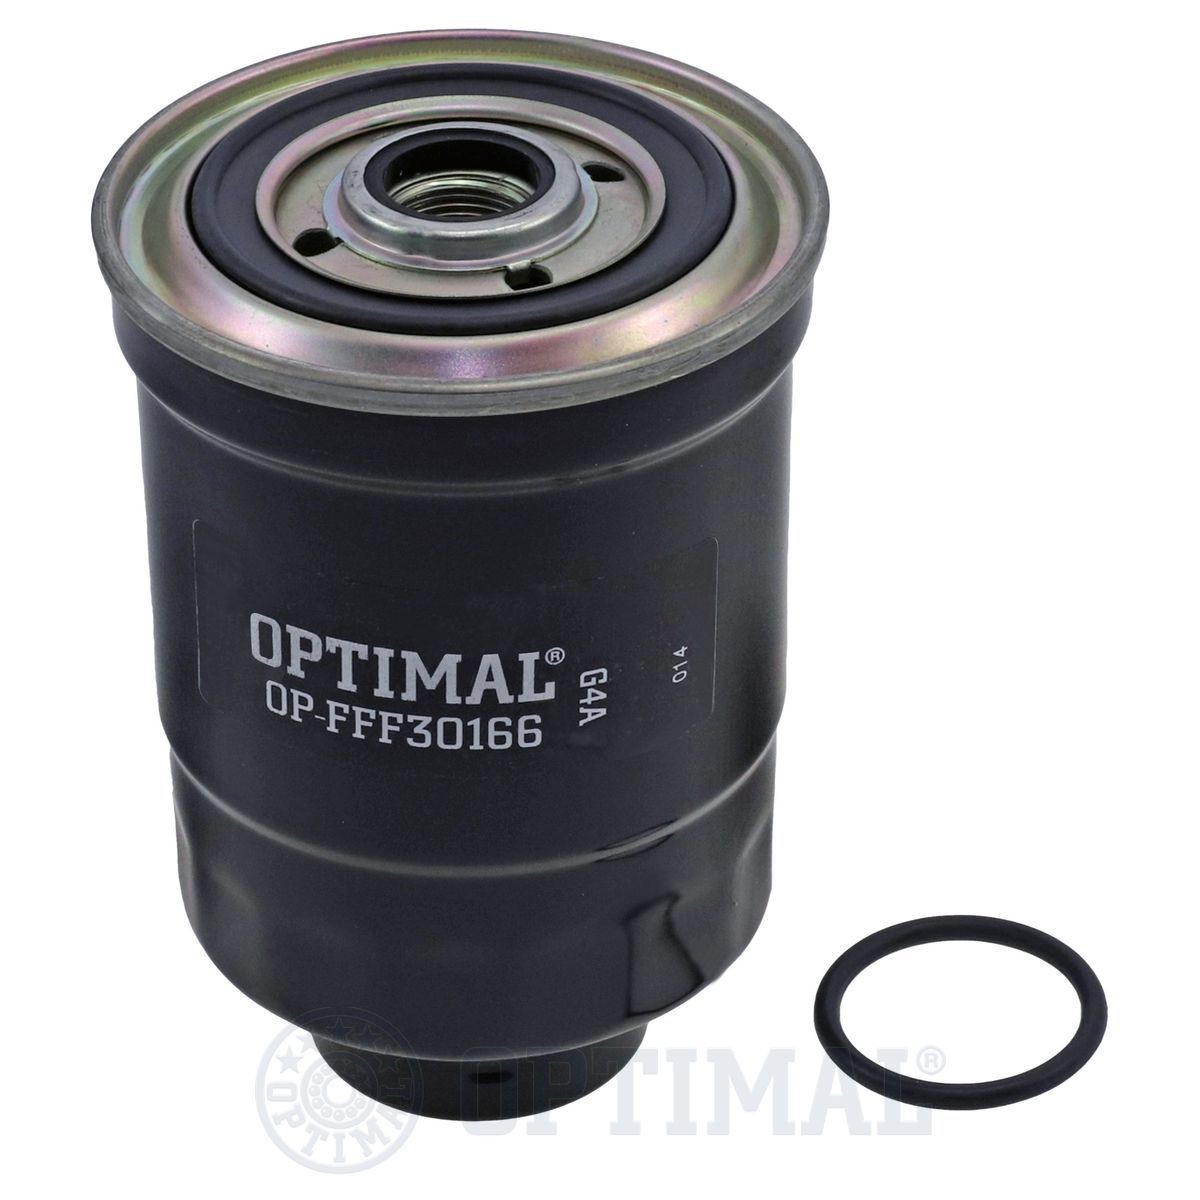 OPTIMAL OP-FFF30166 Fuel filter XB2-20-900